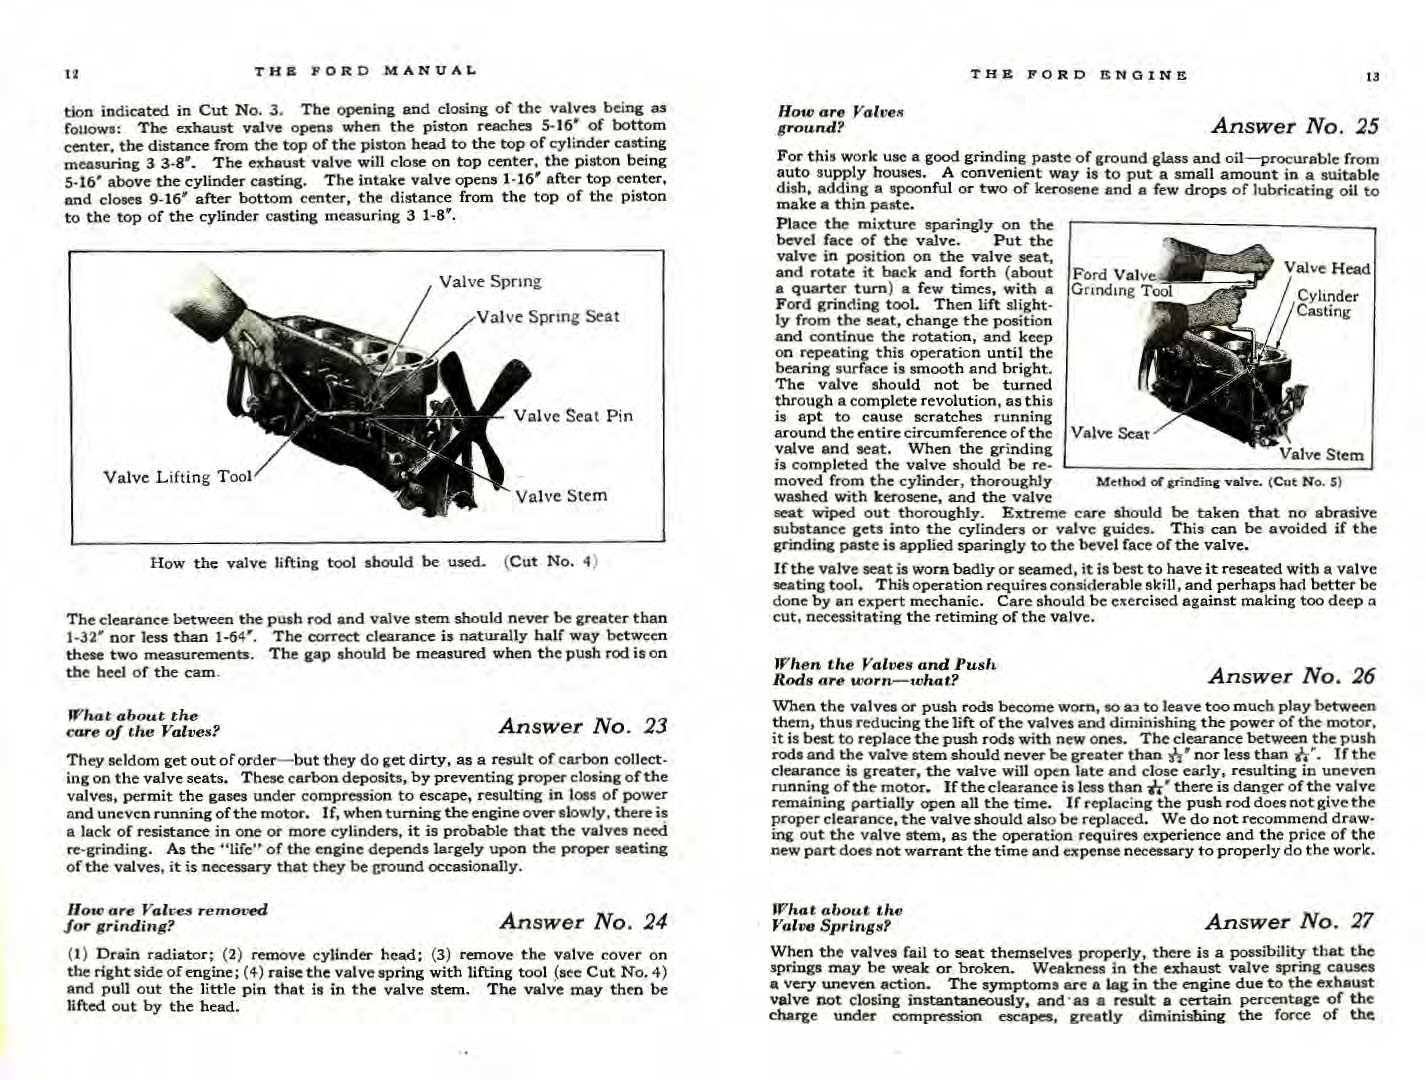 n_1922 Ford Manual-12-13.jpg